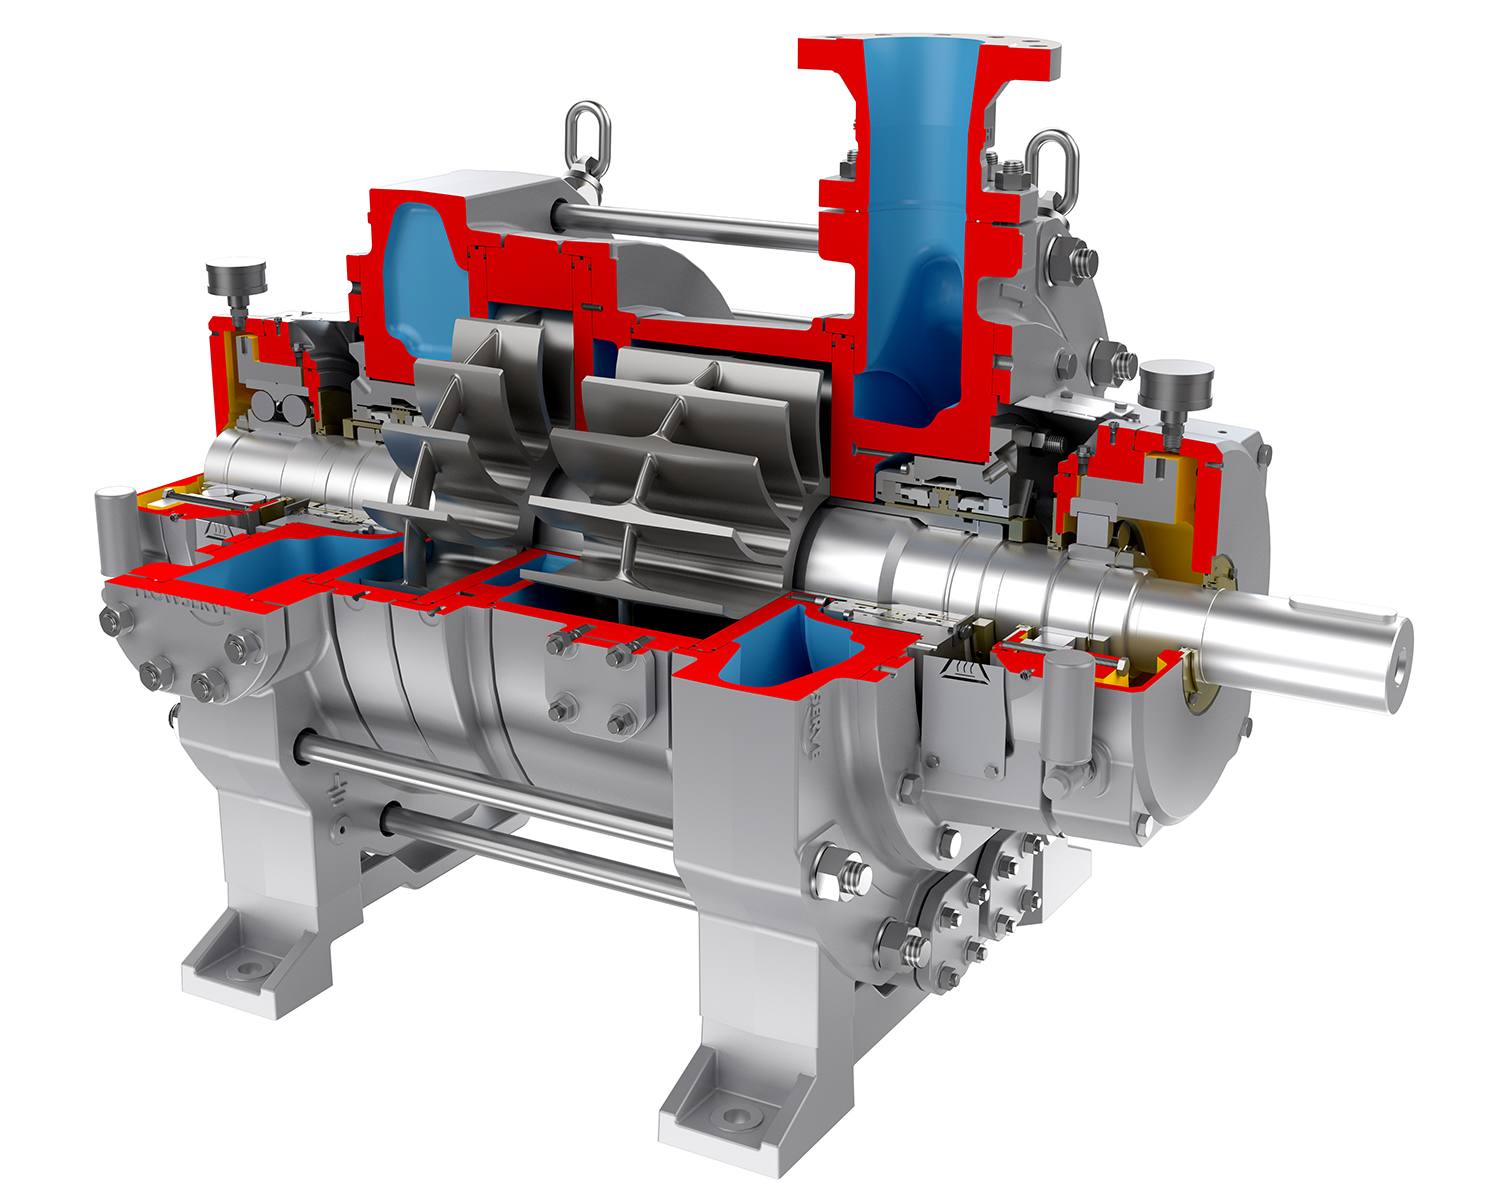 The Next-Generation Liquid Ring Compressors | Pumps & Systems